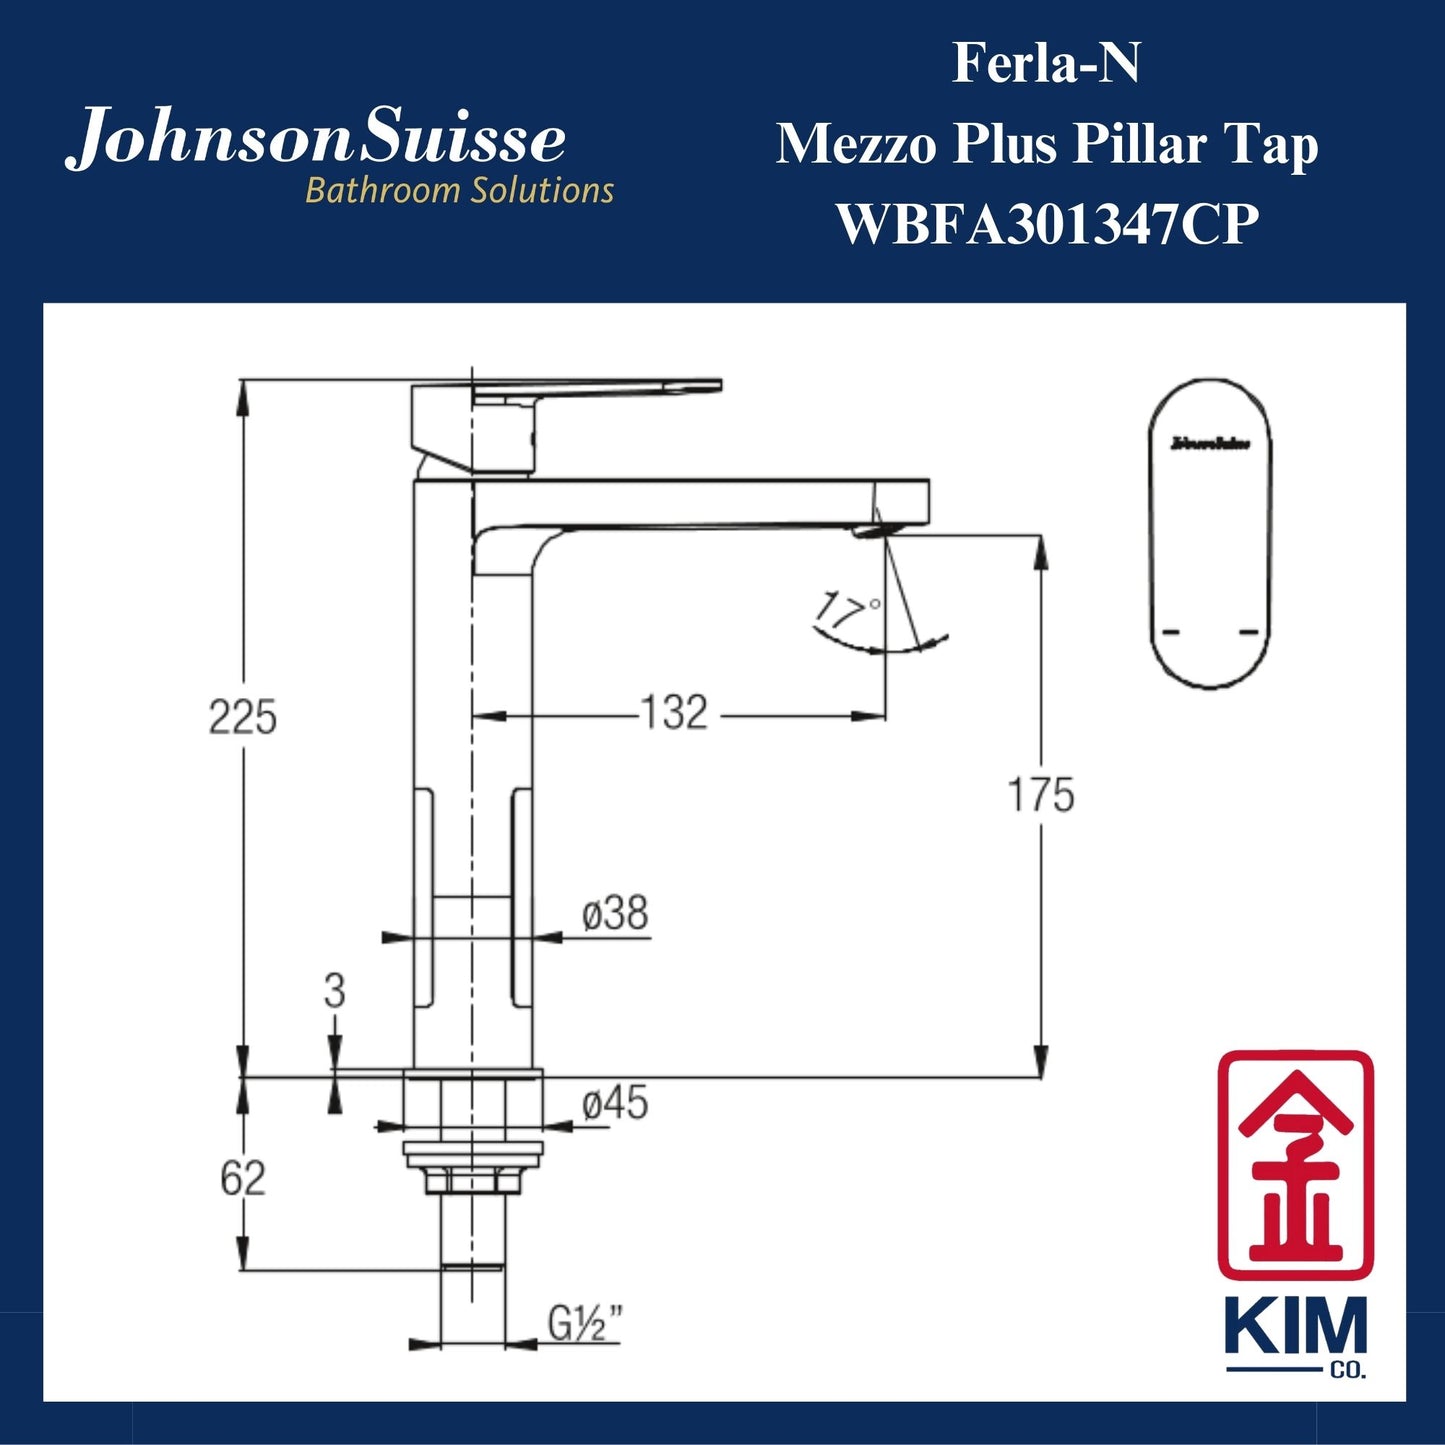 Johnson Suisse Ferla-N Mezzo Plus Basin Pillar Tap (WBFA301347CP)